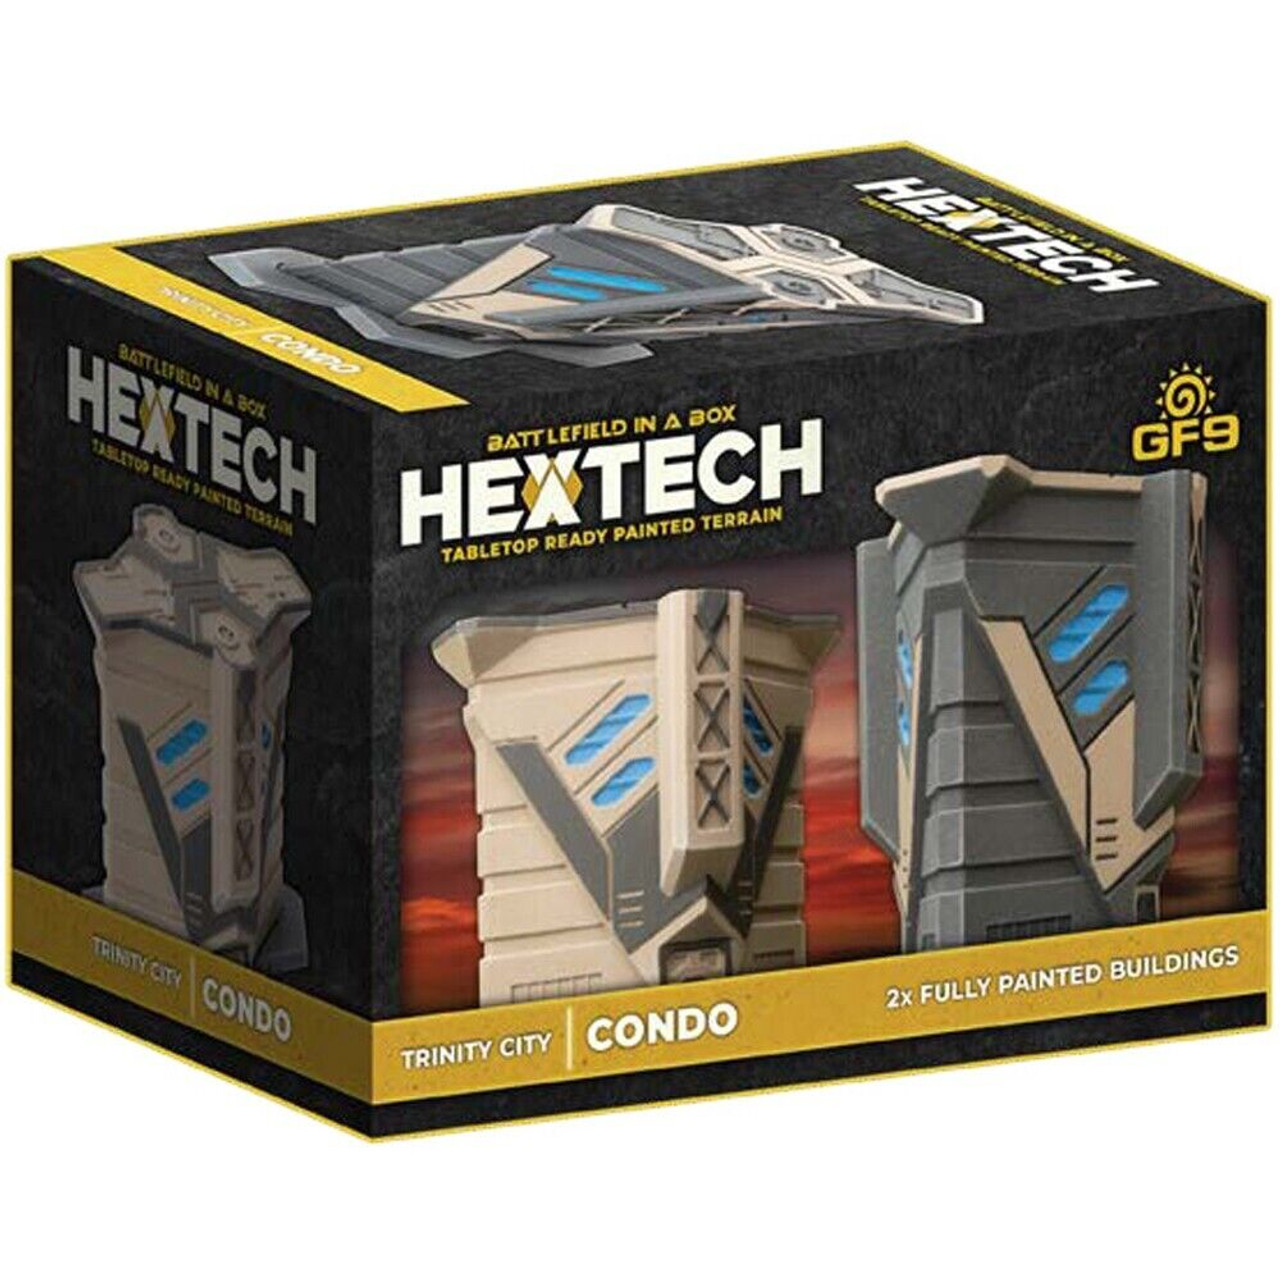 Battlefield in a Box: HexTech - Condo